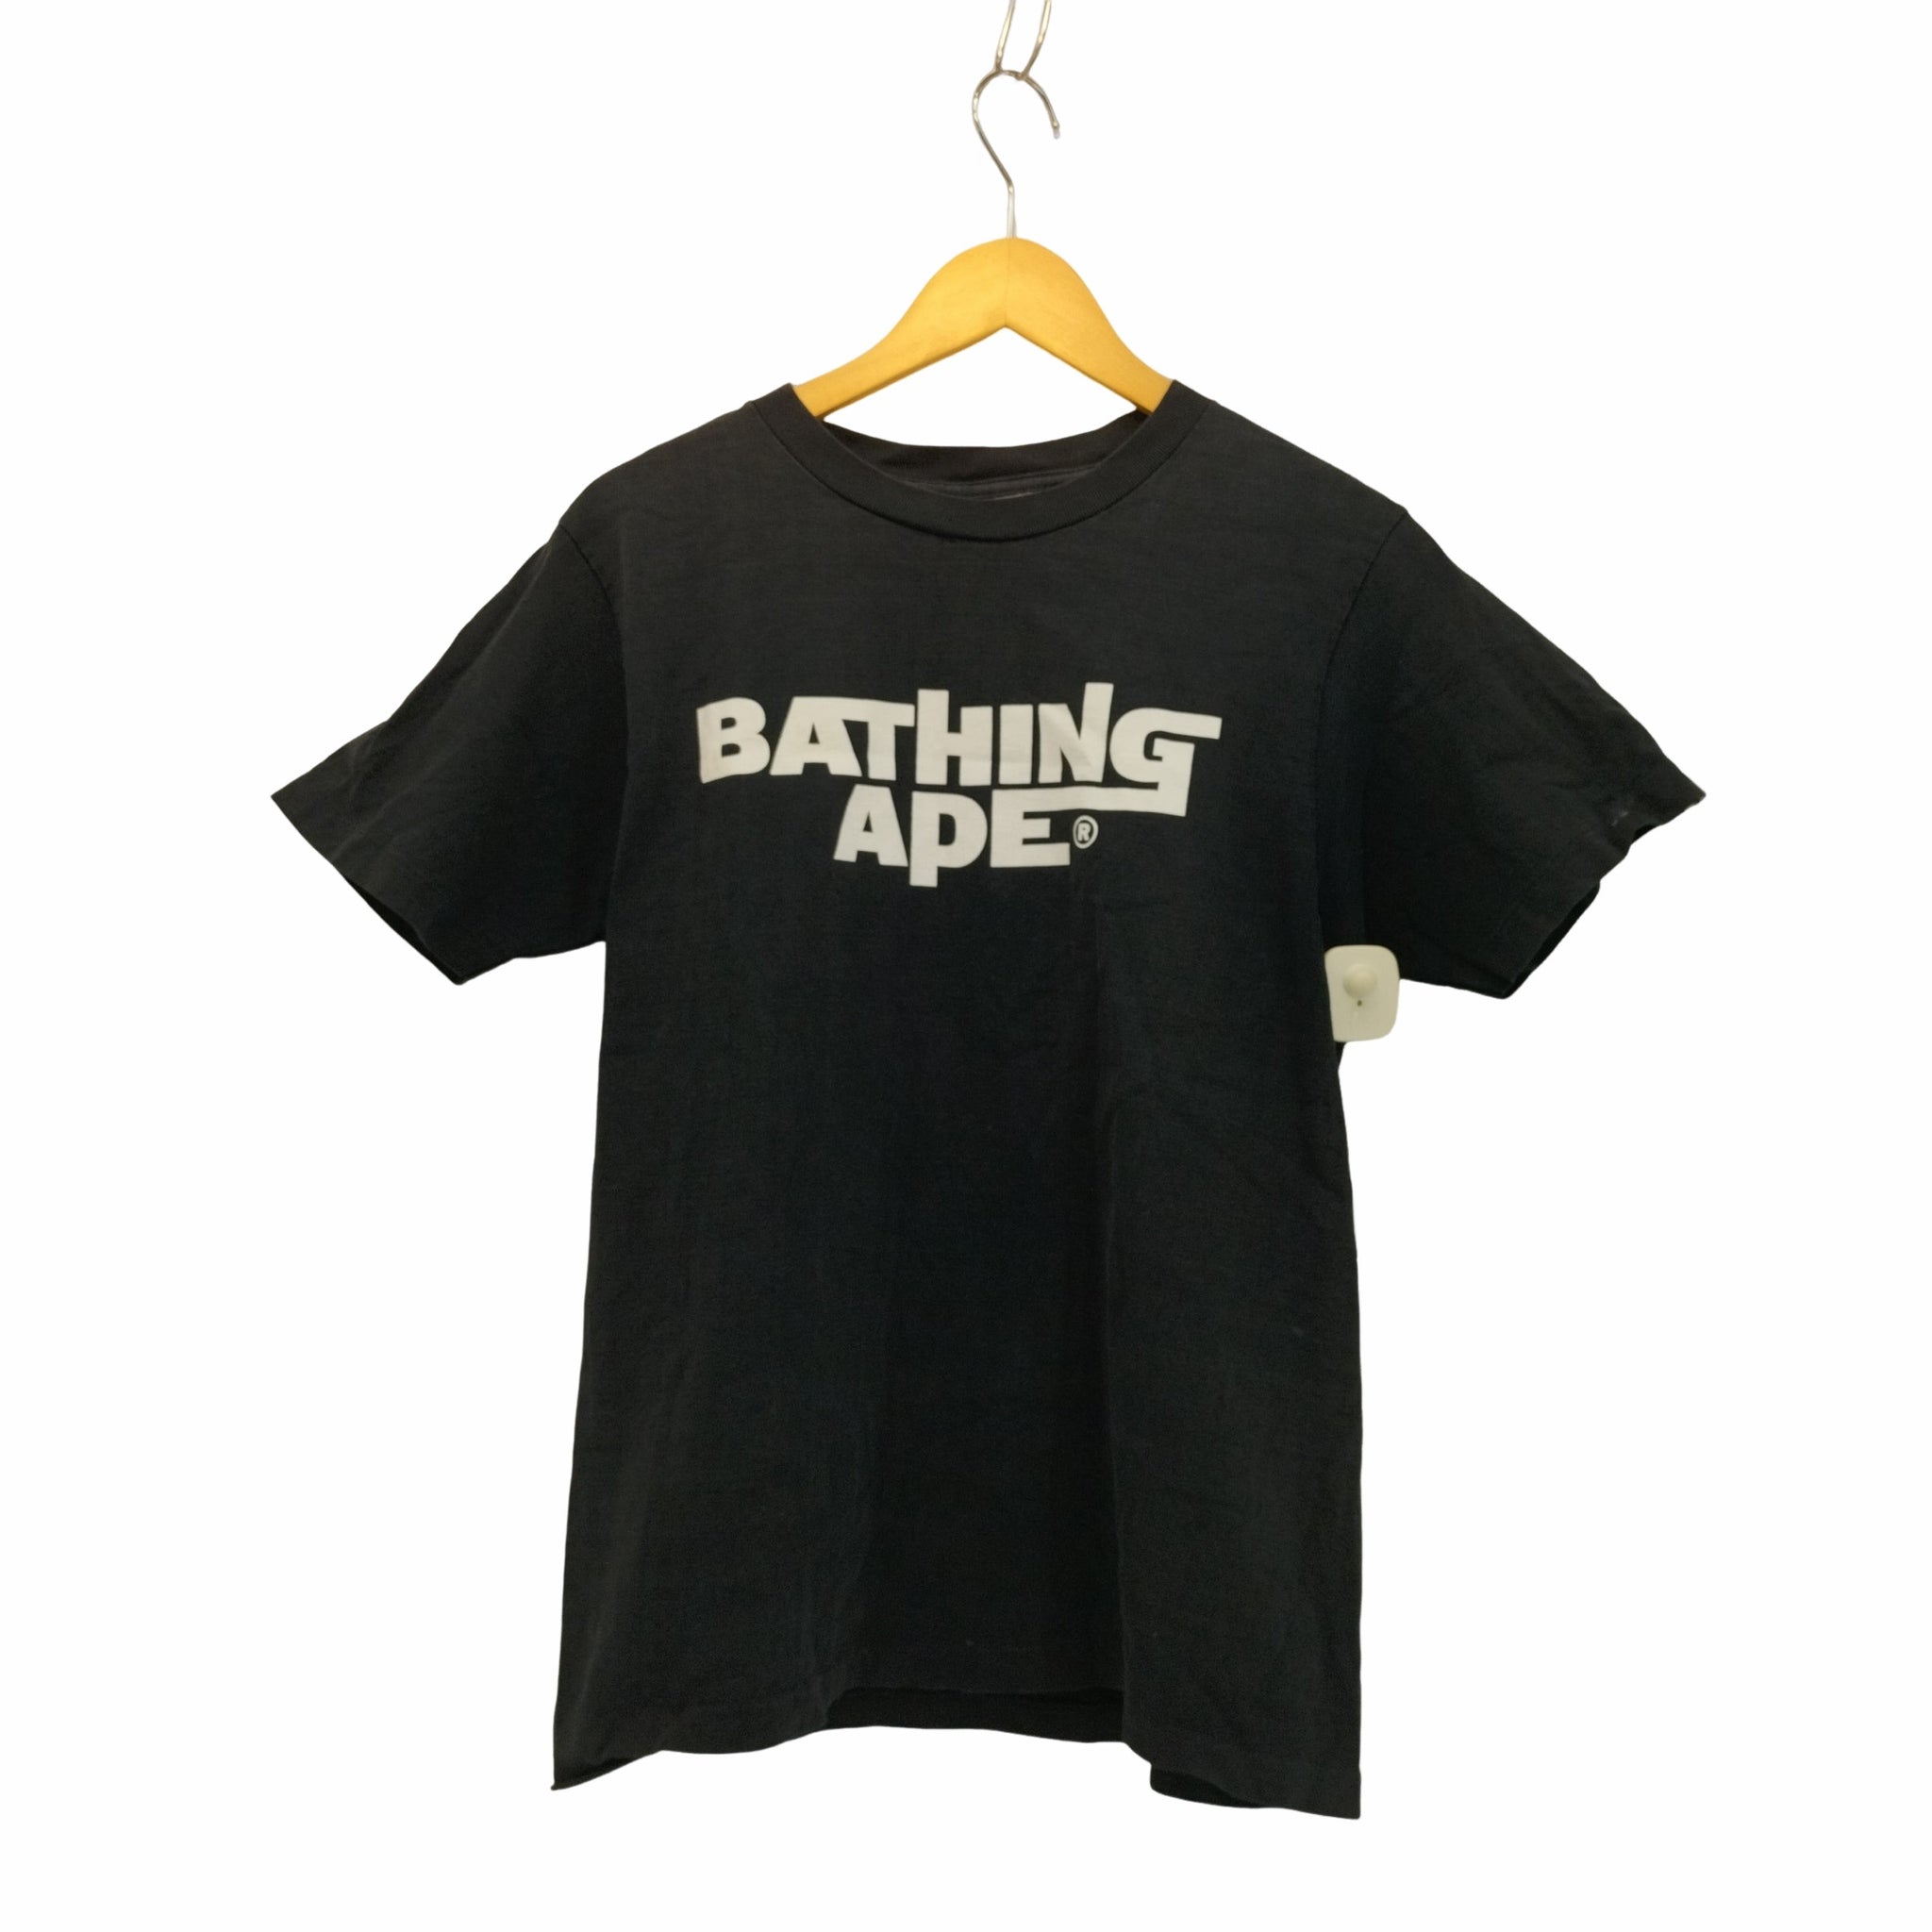 A BATHING APE(アベイシングエイプ)初期 BAPE HEADS SHOW 2002